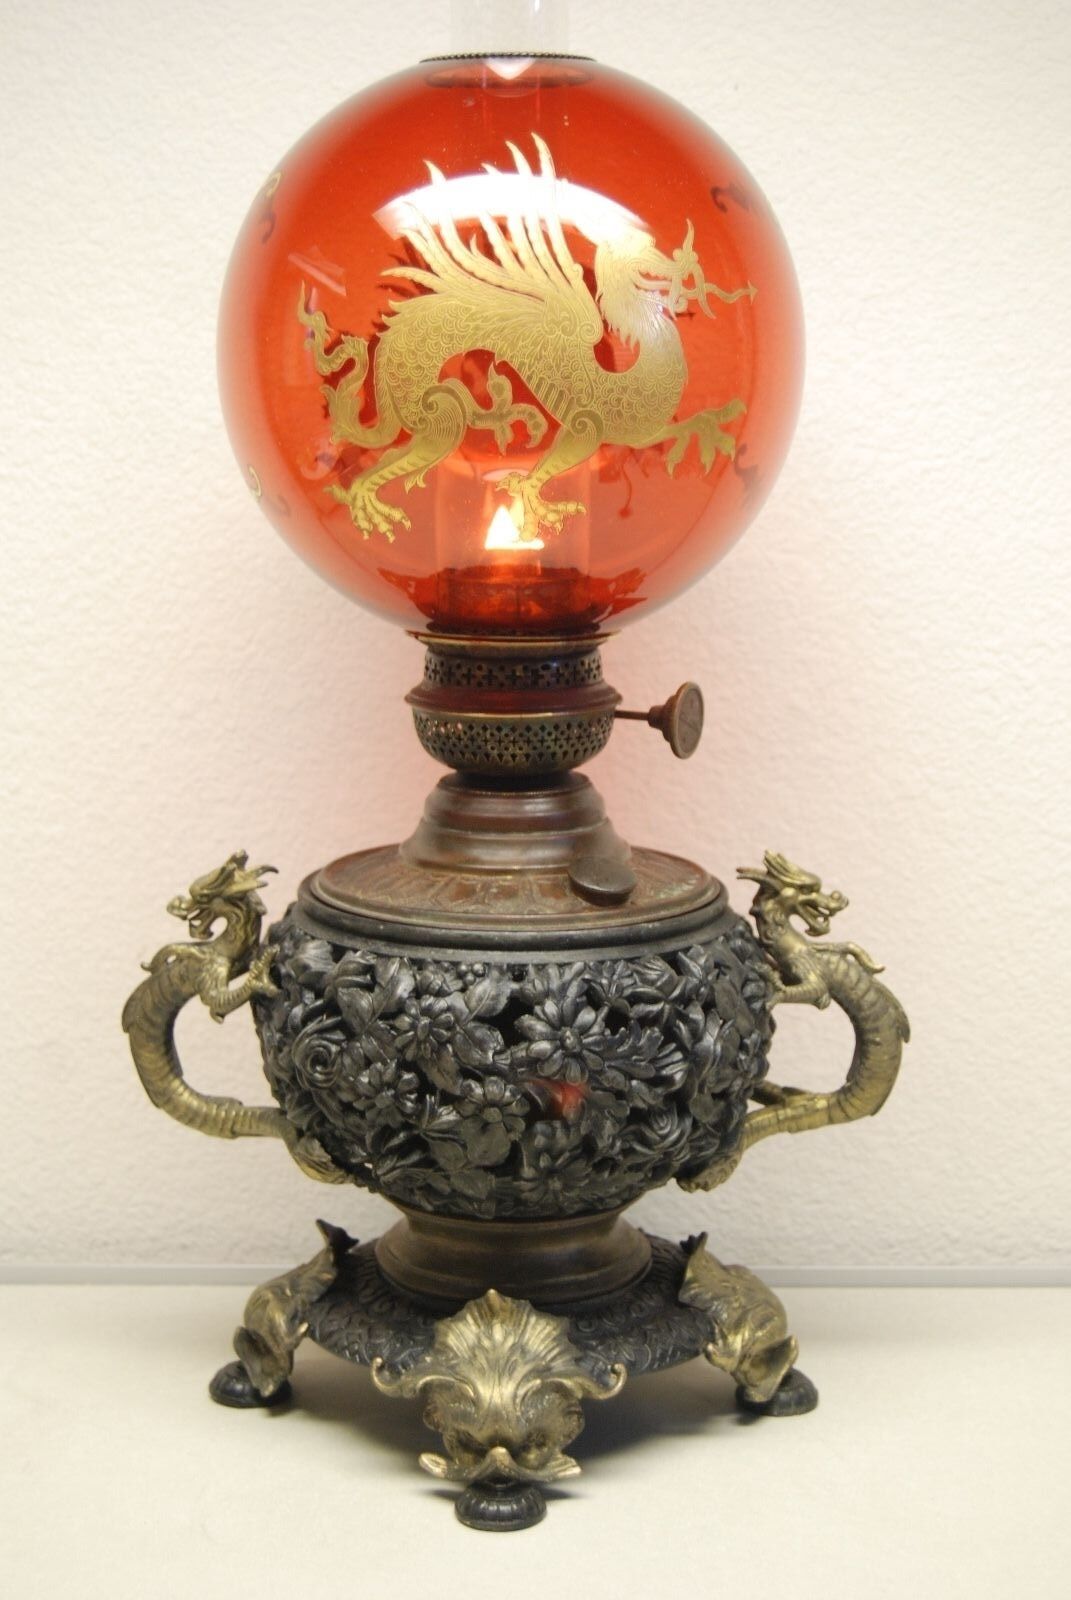 ANTIQUE GILT DRAGON KEROSENE OIL CHINESE JAPANESE LAMP CRANBERRY GLASS SHADE OLD